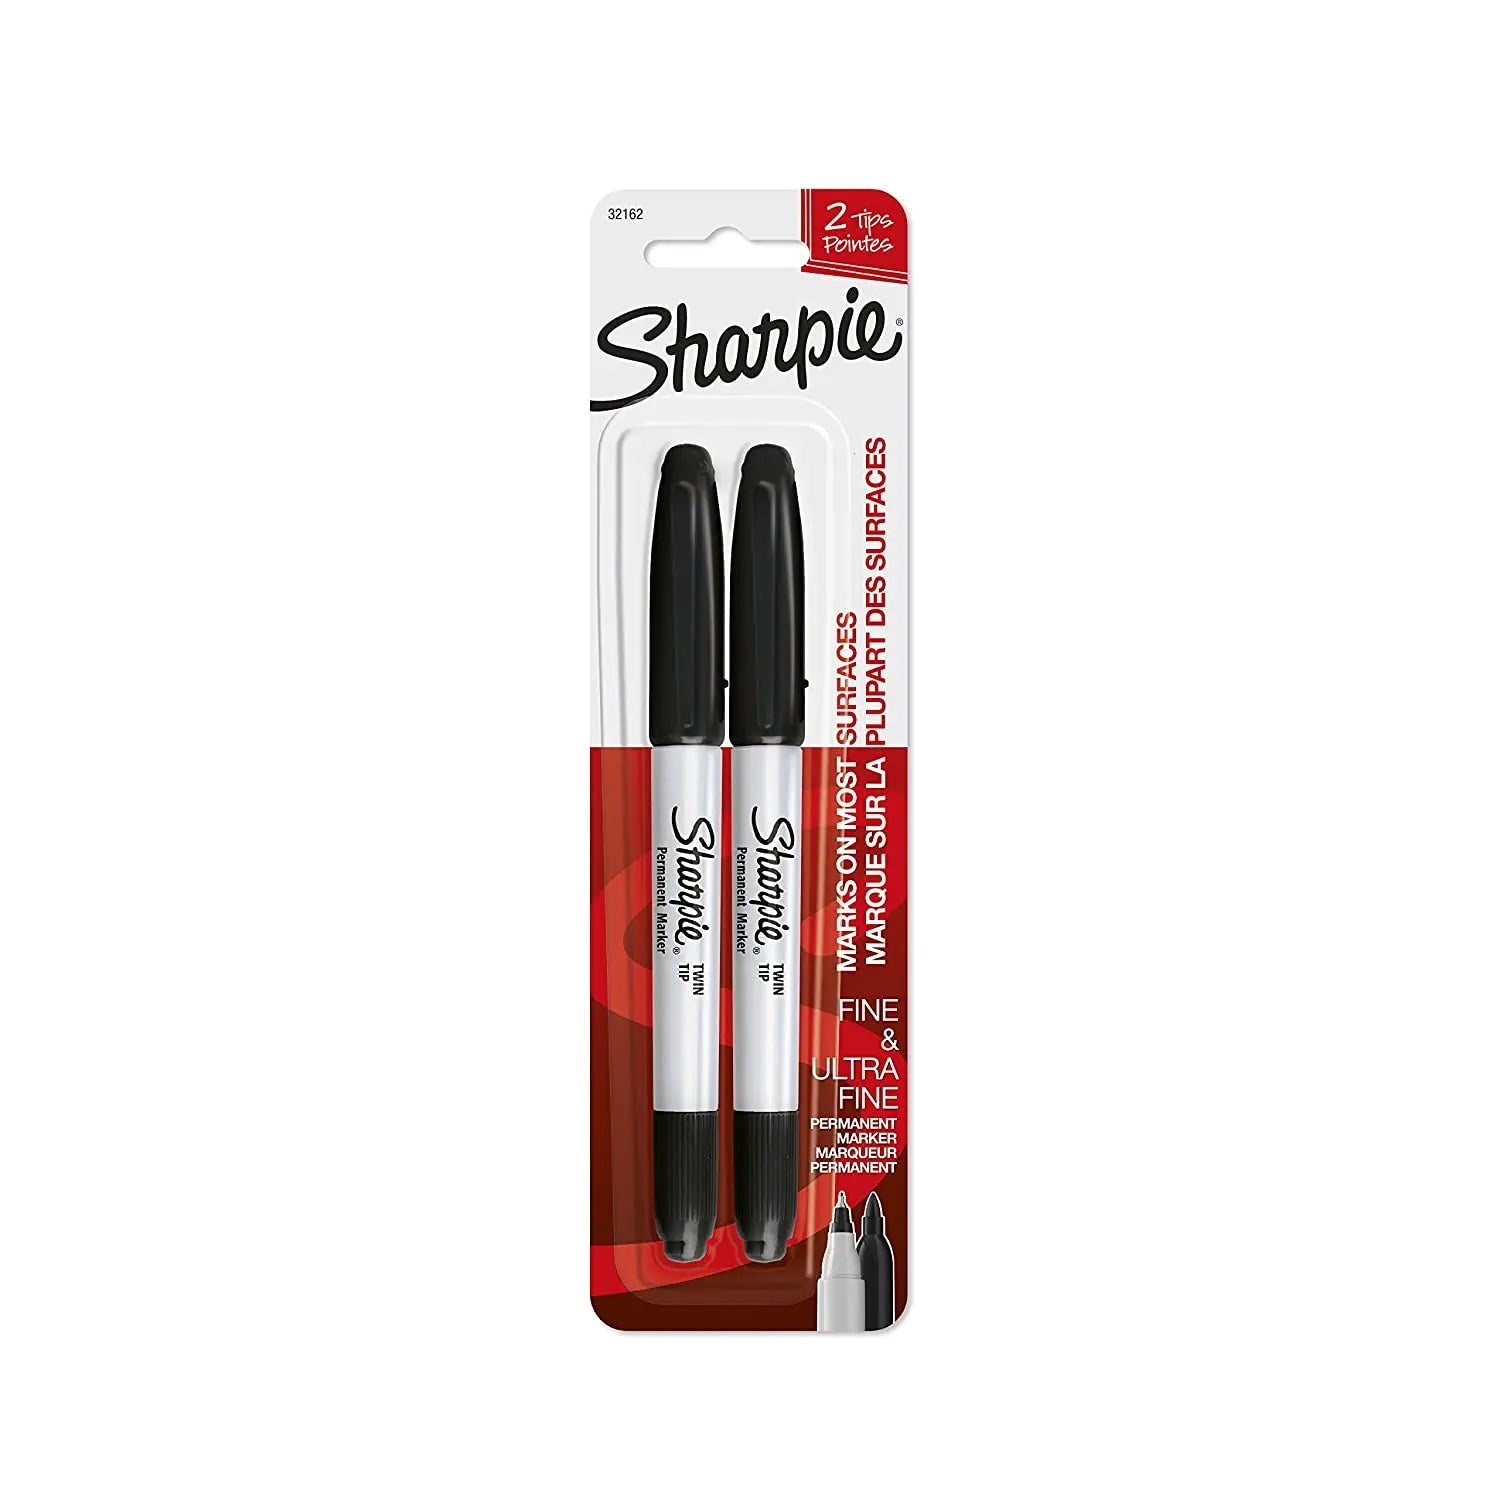 Sharpie Twin Tip Marker Black 2 Colour Set Sharpie